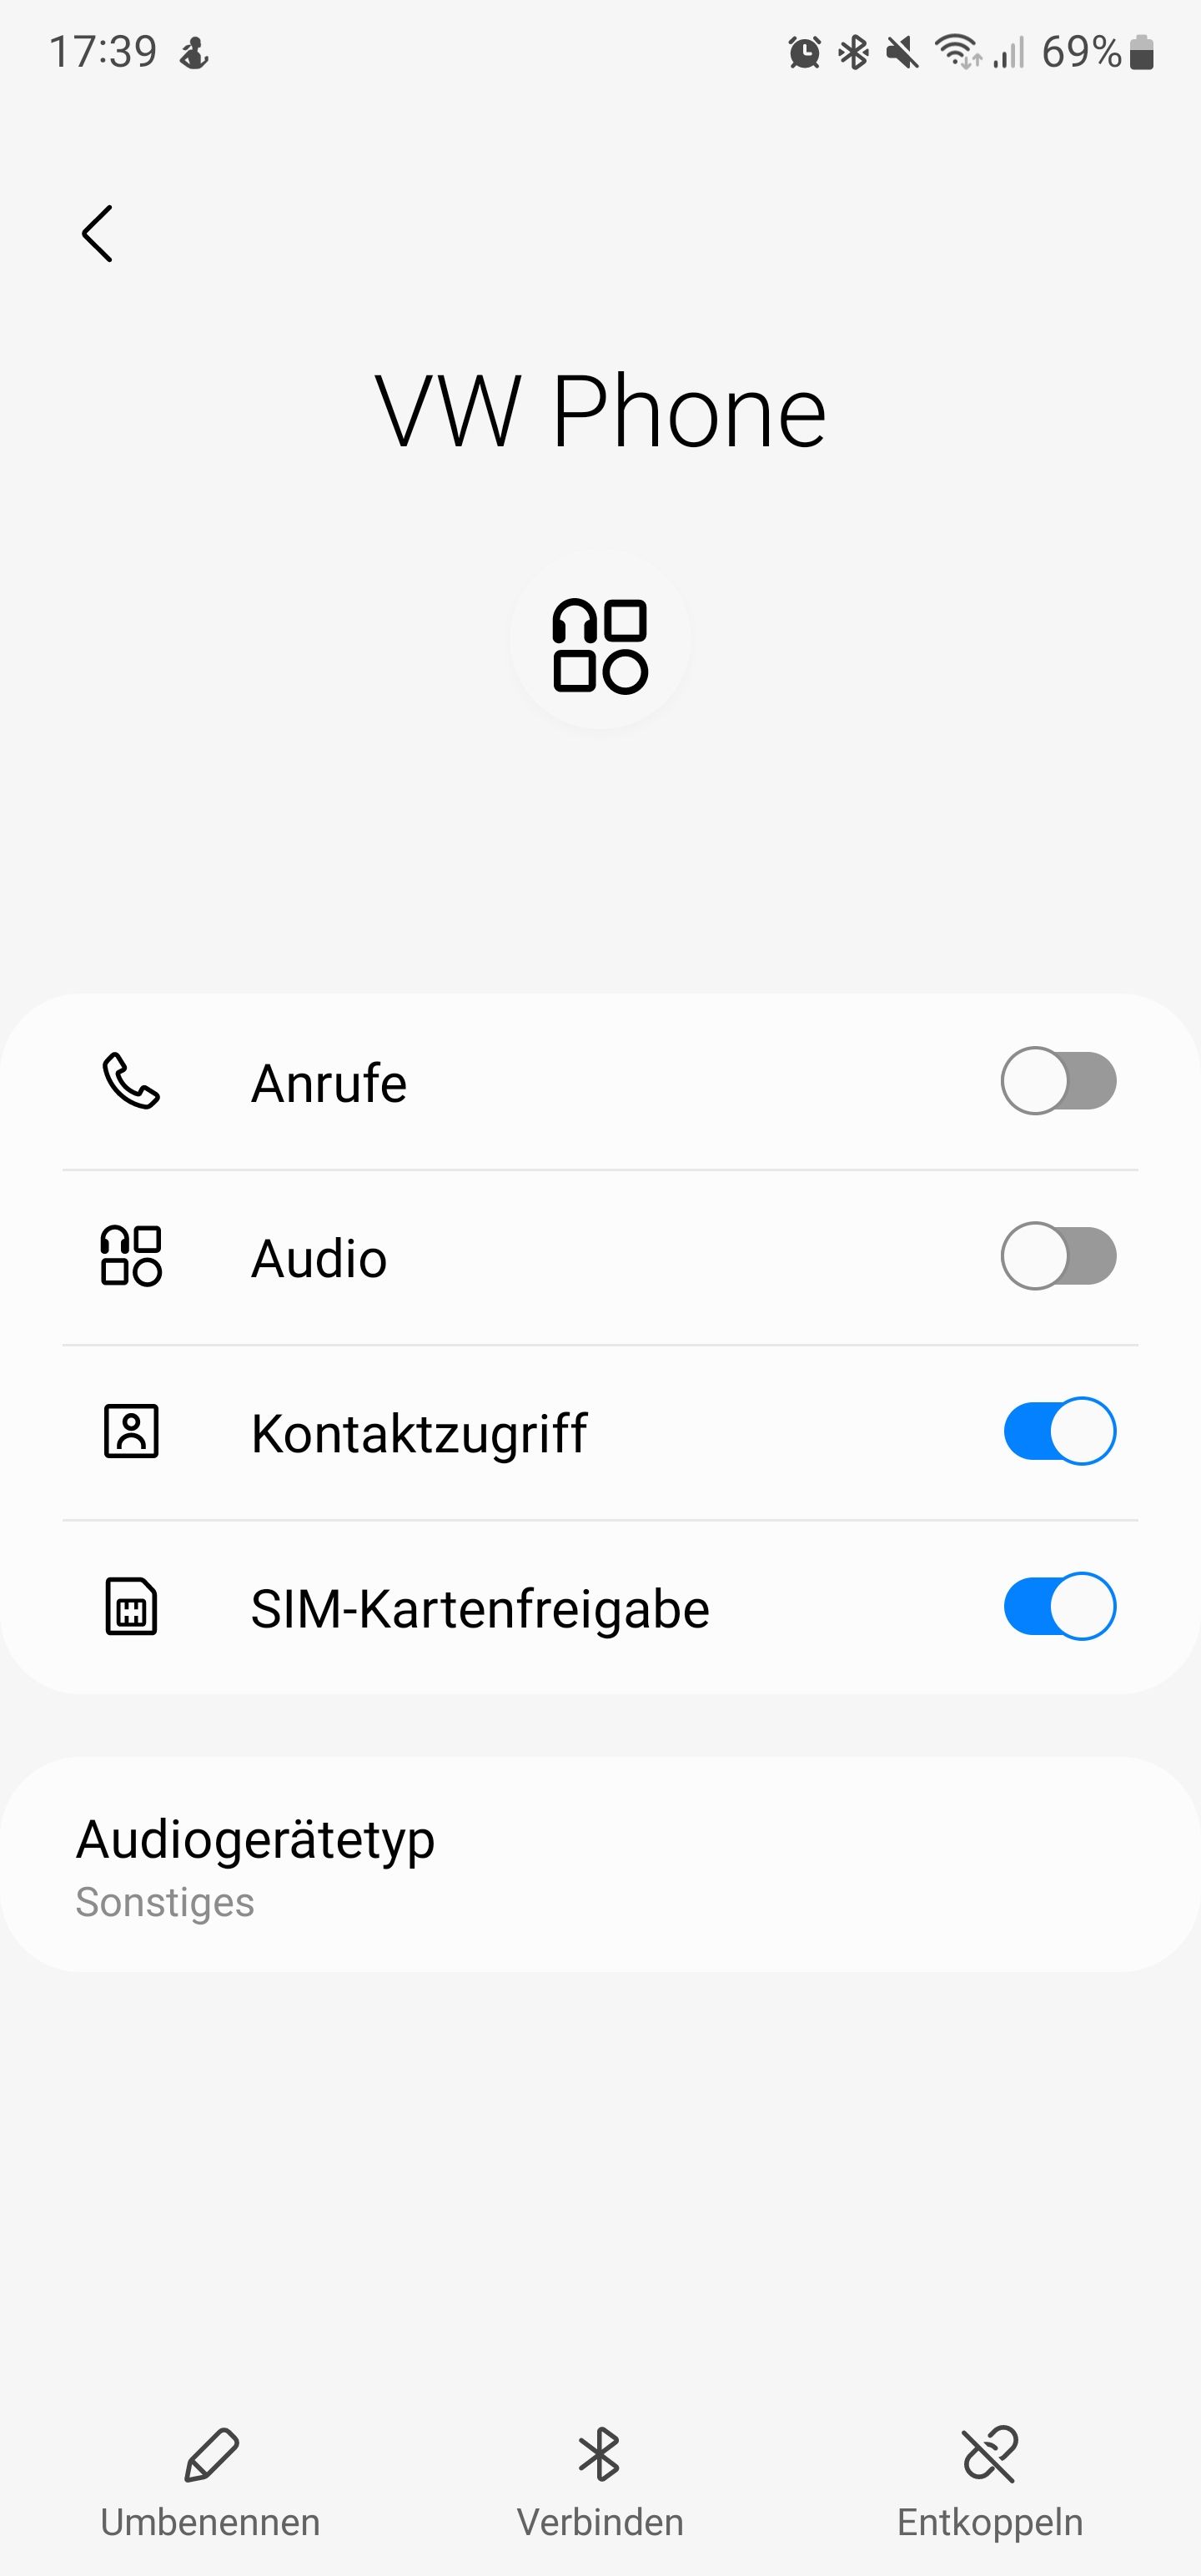 S22 U und rSAP (remote SIM Access profile) - Samsung Community